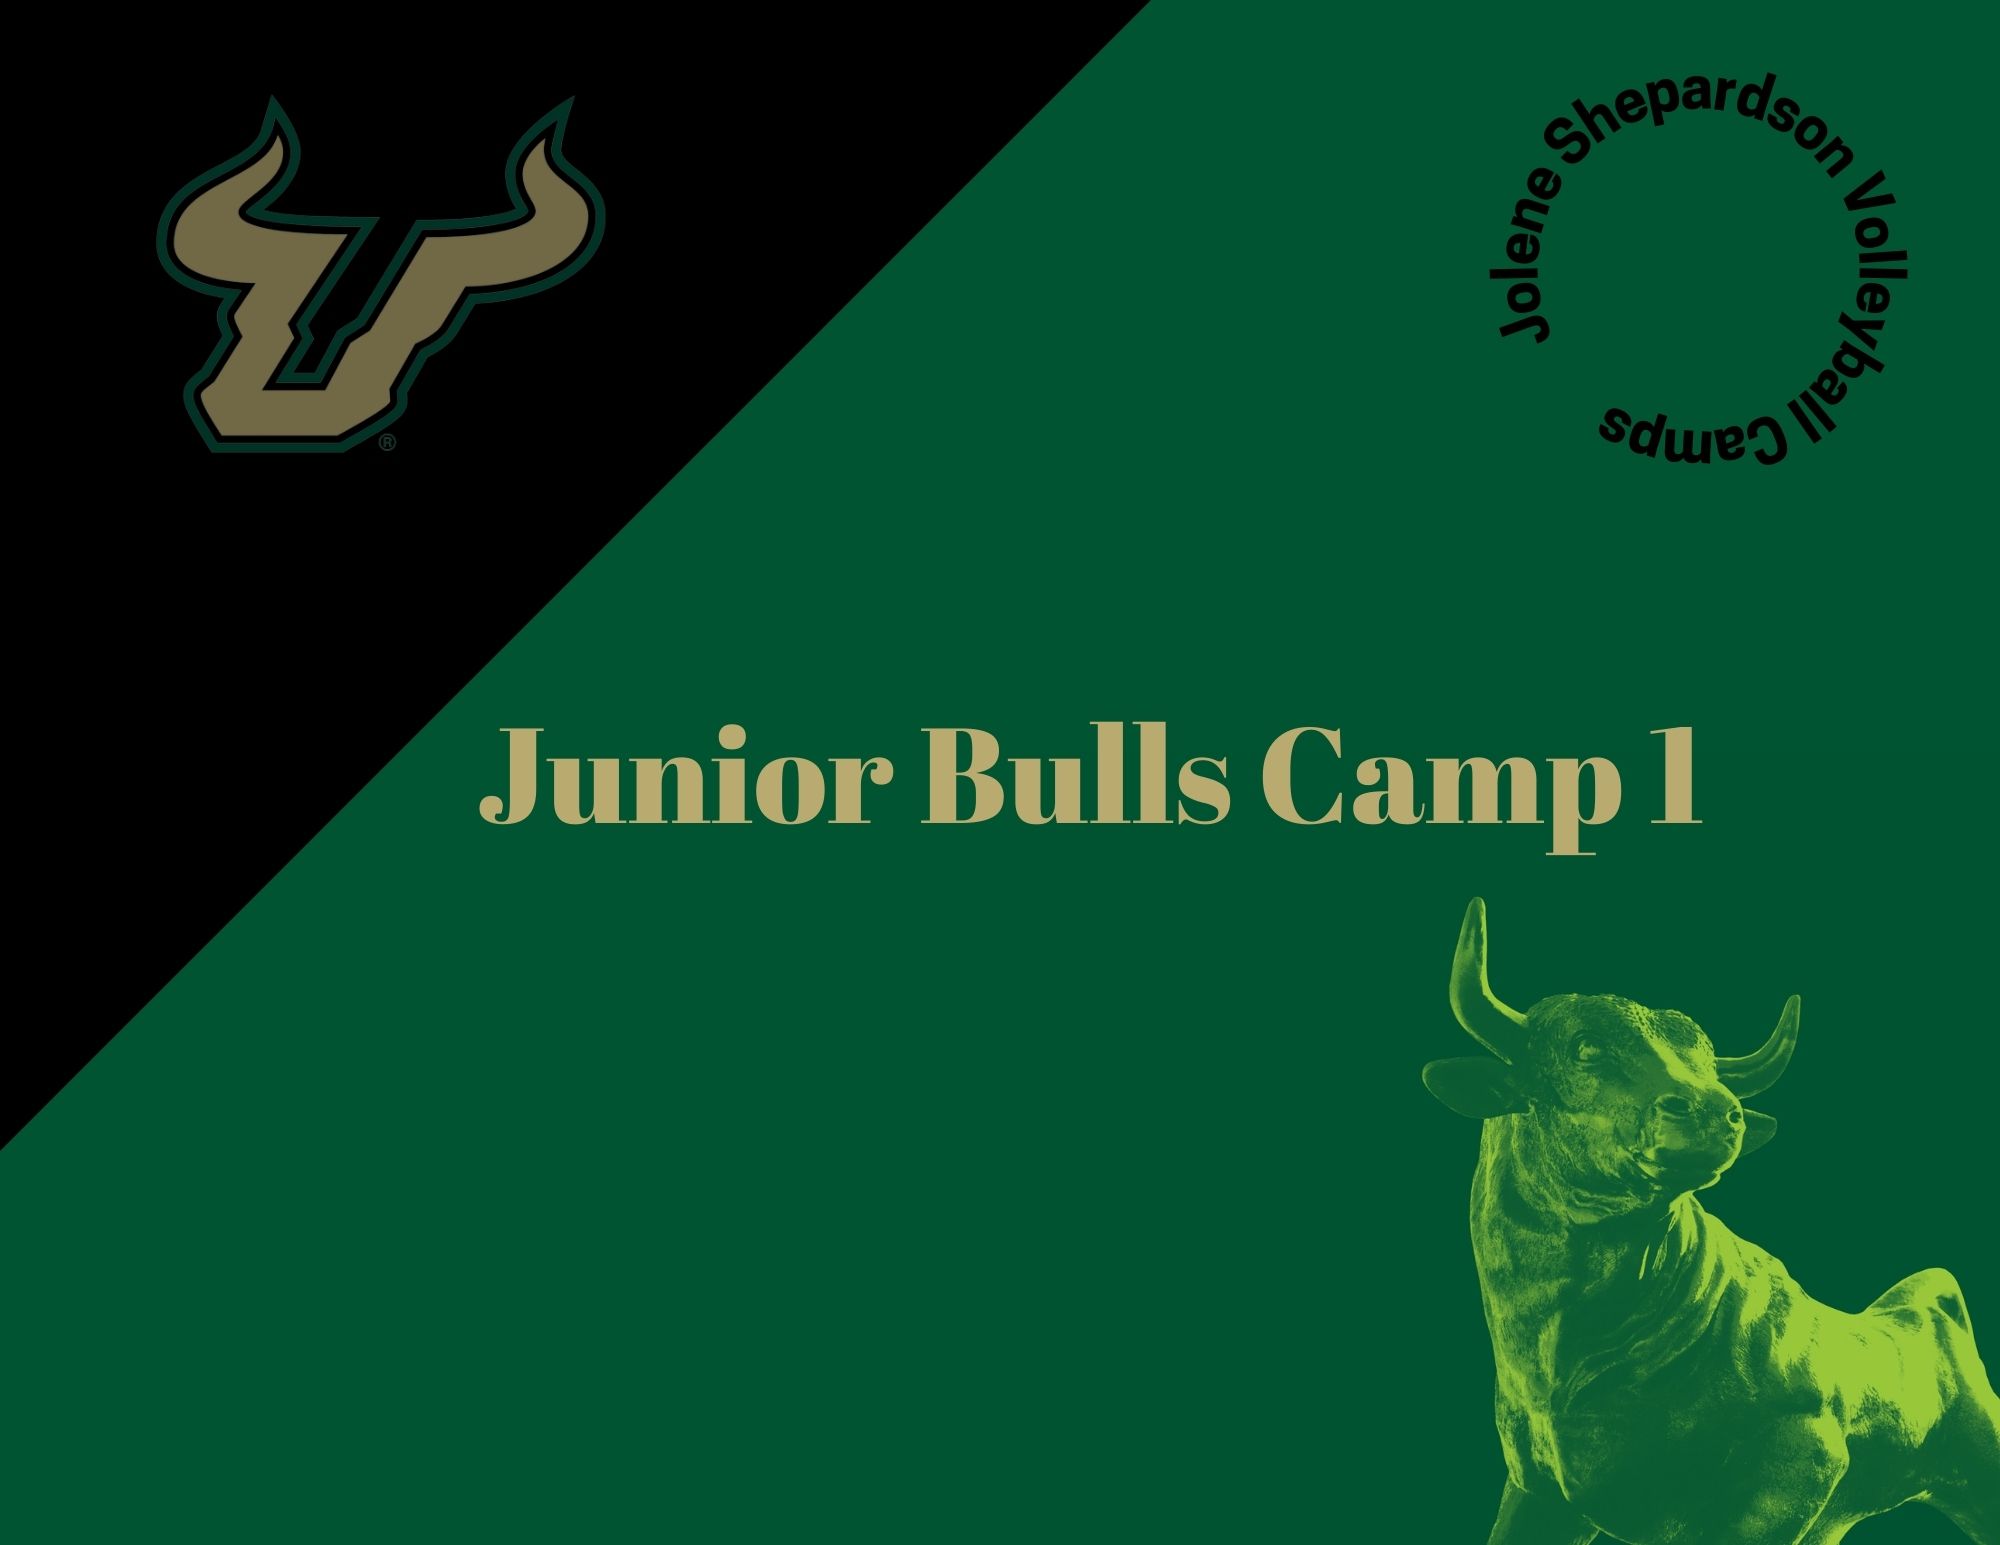 Junior Bulls Camp I - Registration Closed event image